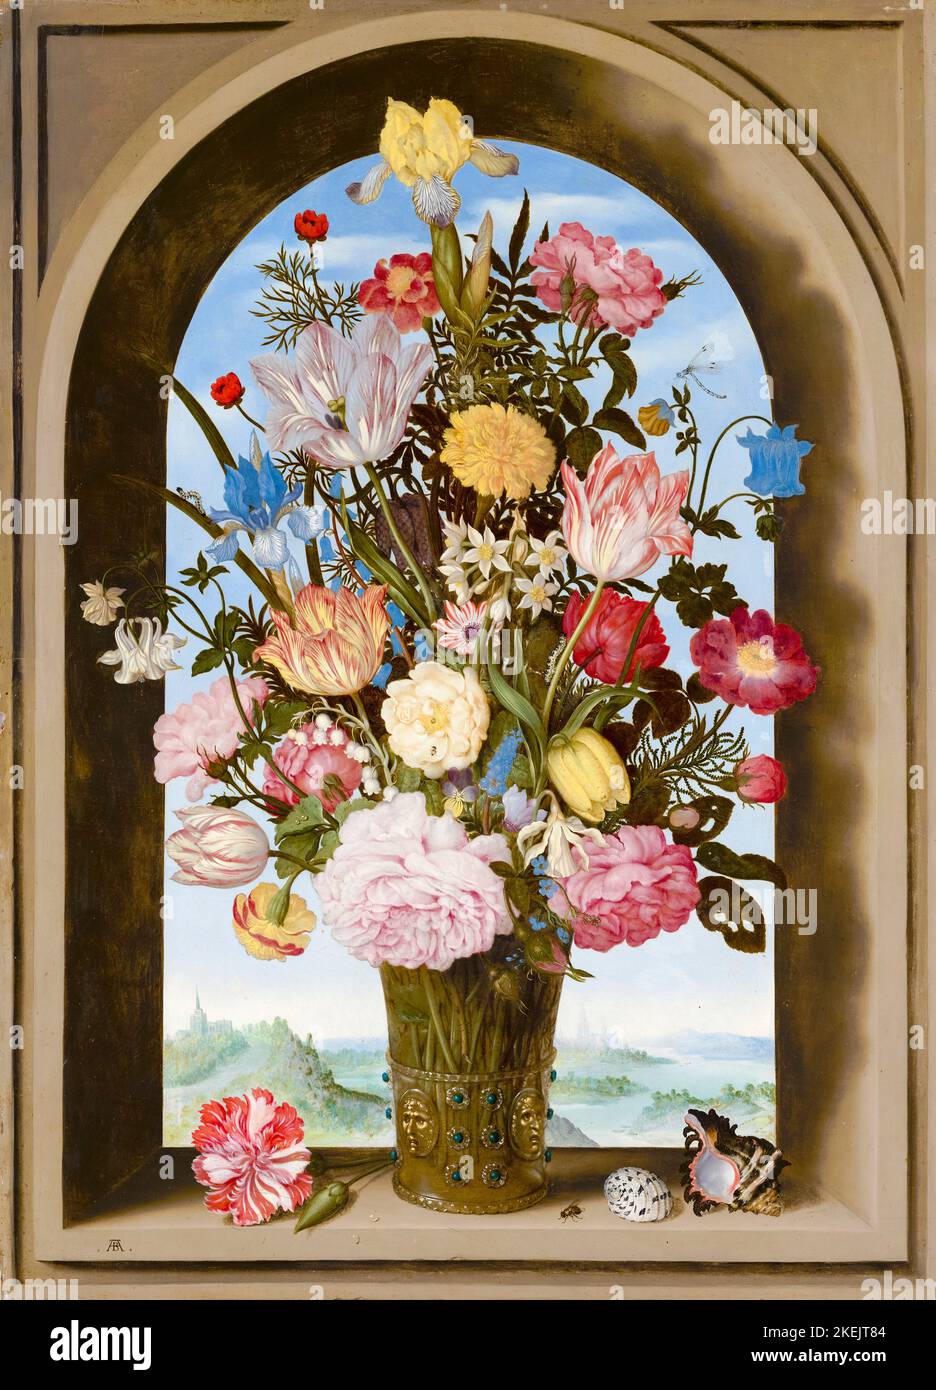 Ambrosius Bosschaert still life painting, Vase of Flowers in a Window, oil on panel, 1618 Stock Photo